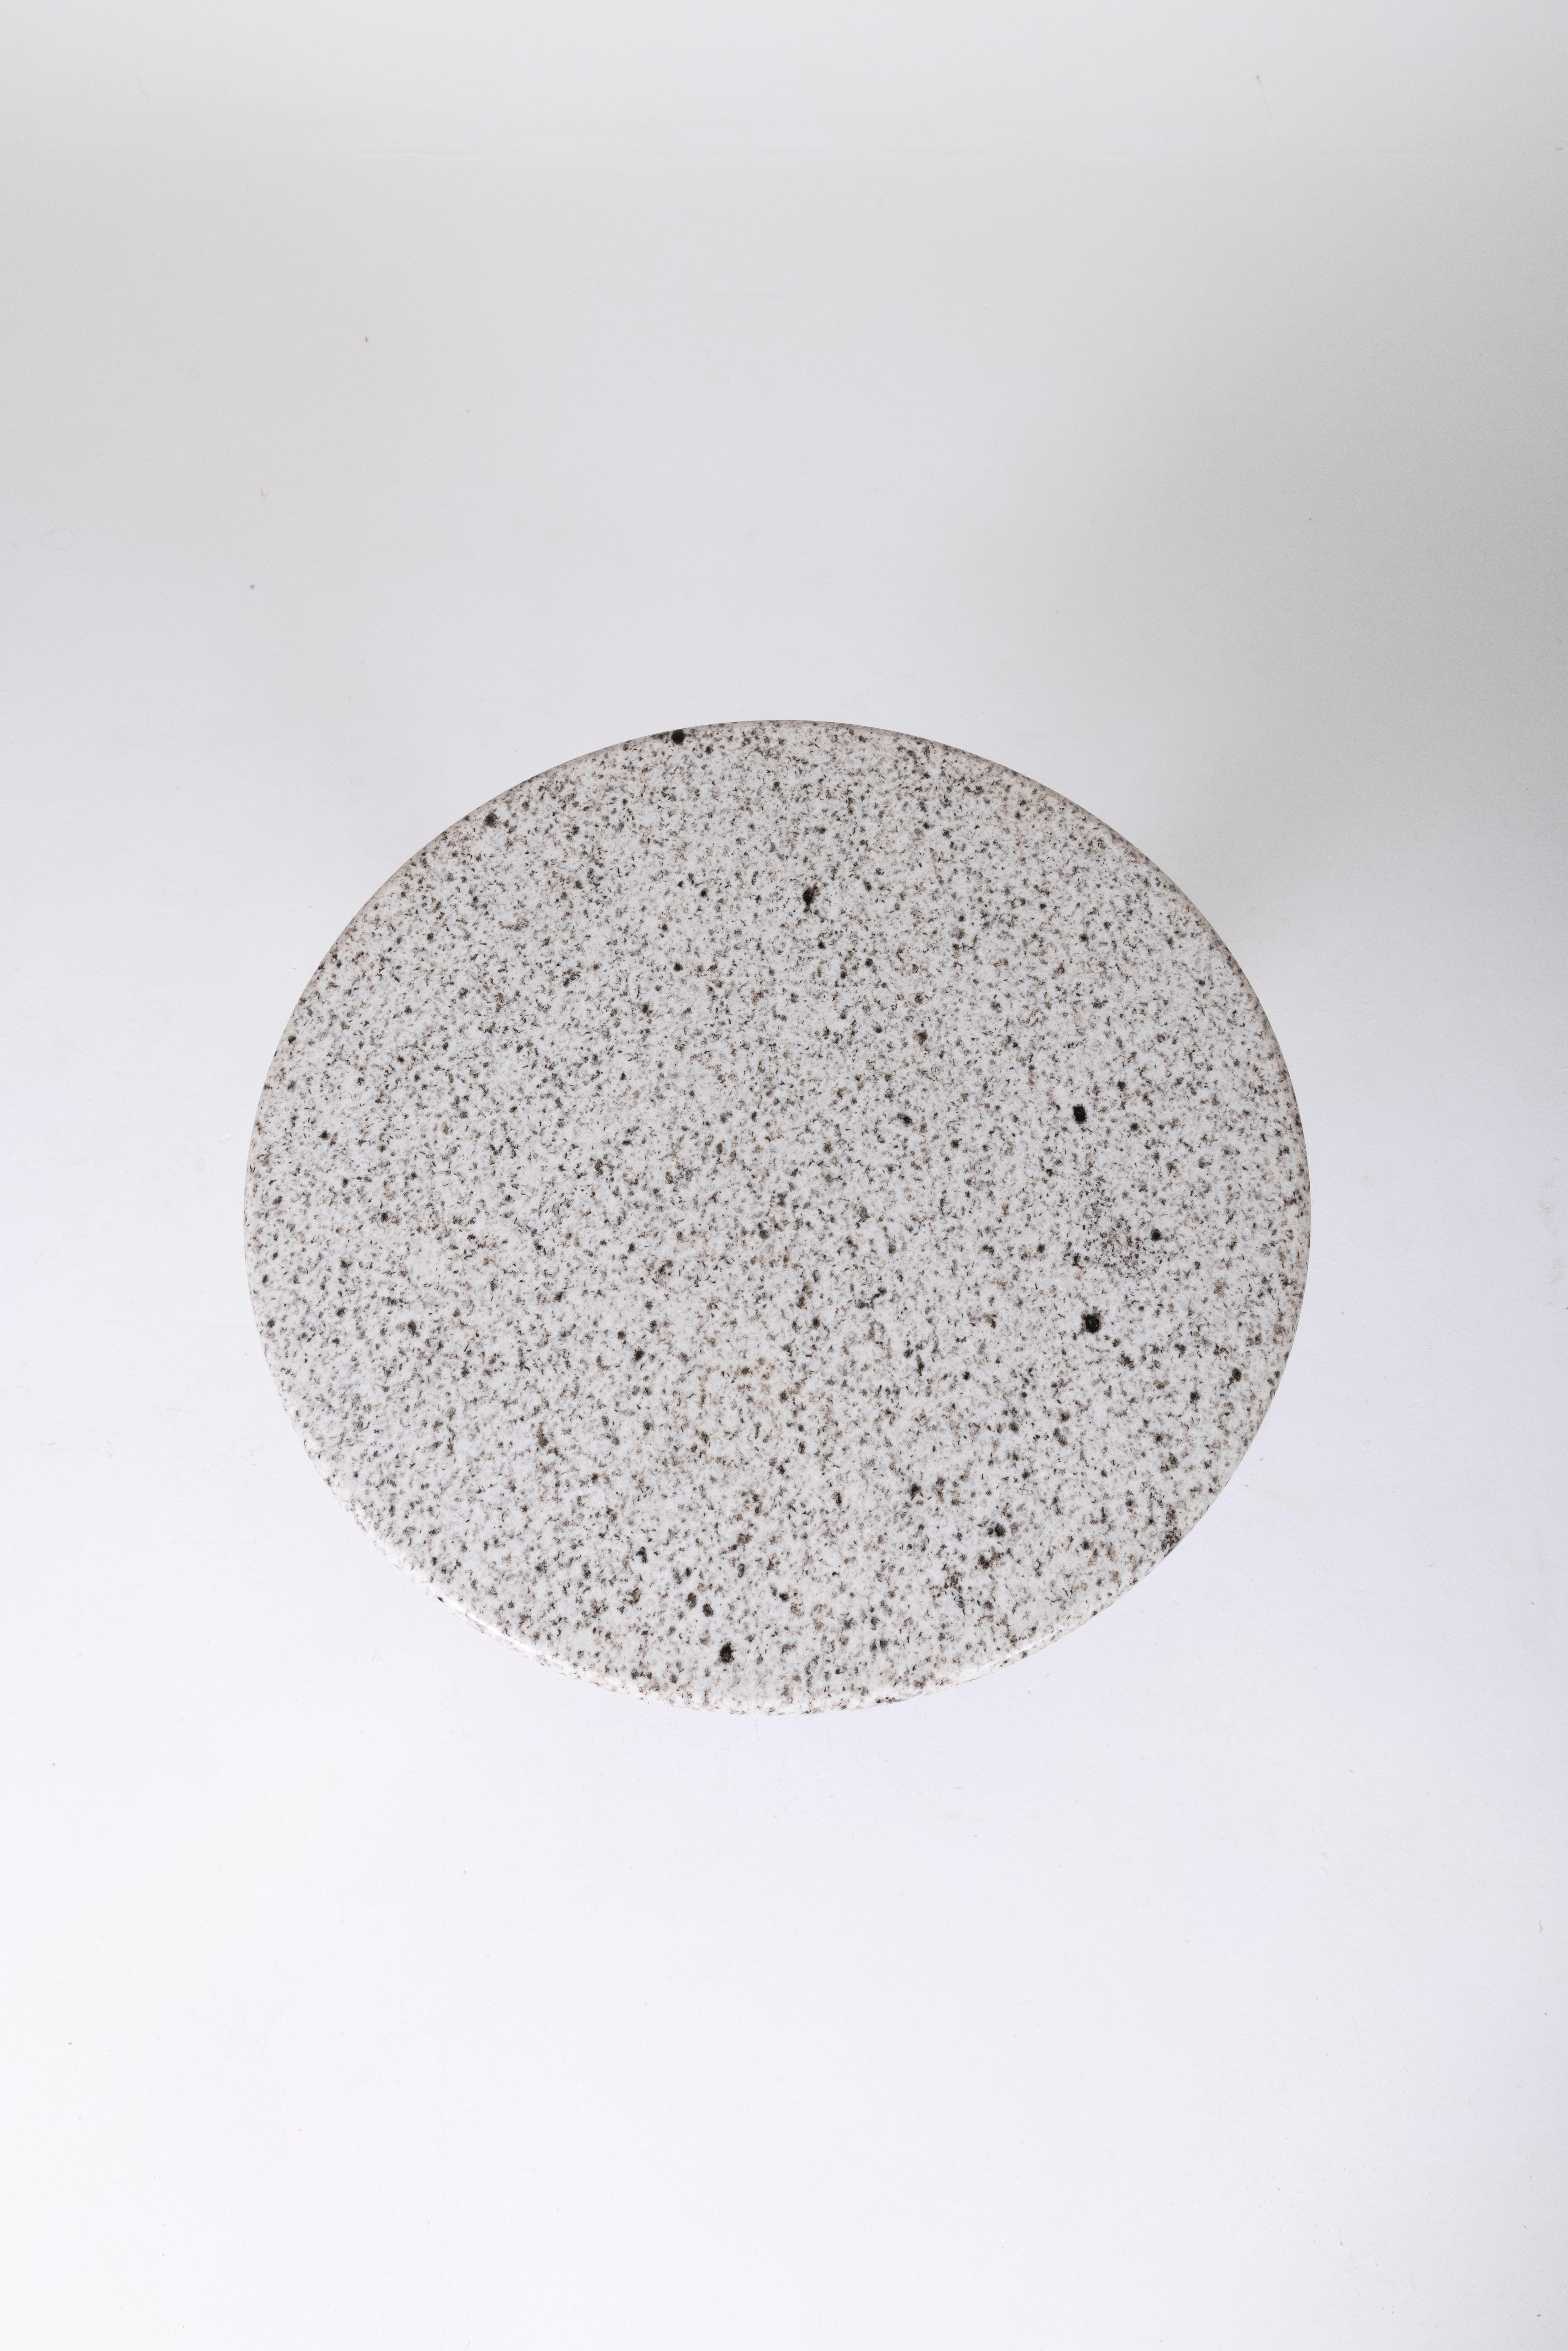 Granite Side table or pedestal table in Memphis granite For Sale